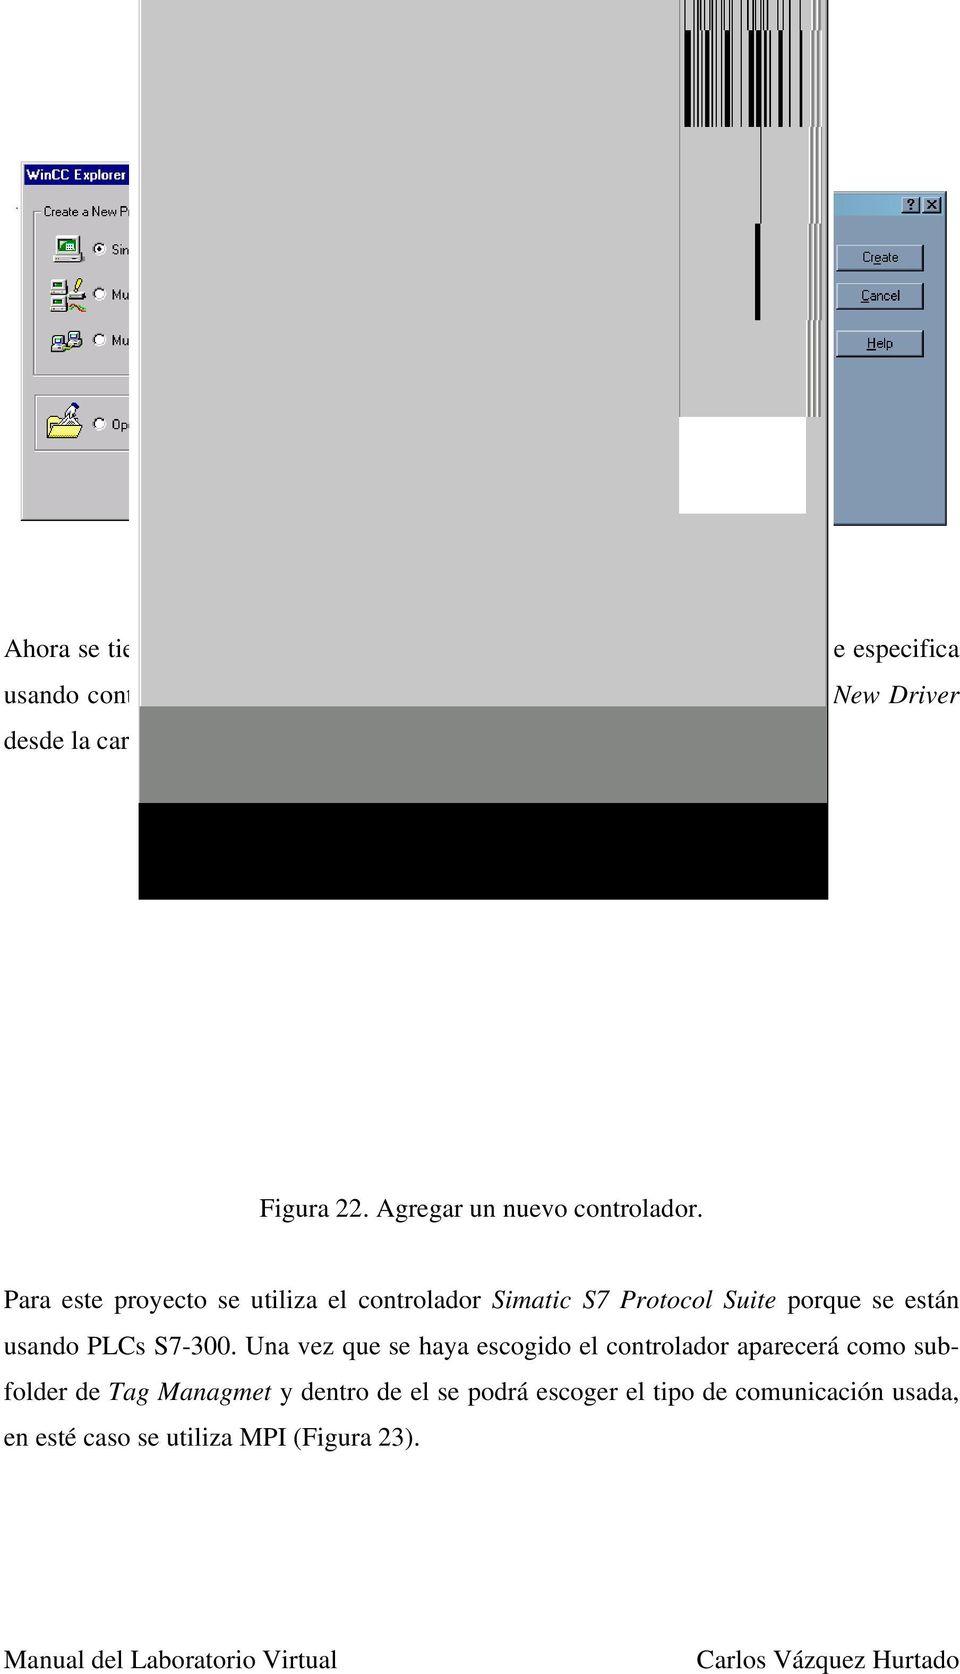 Para configurar el controlador escoja Add New Driver desde la carpeta Tag Managment como se ilustra en la figura 22. Figura 22.